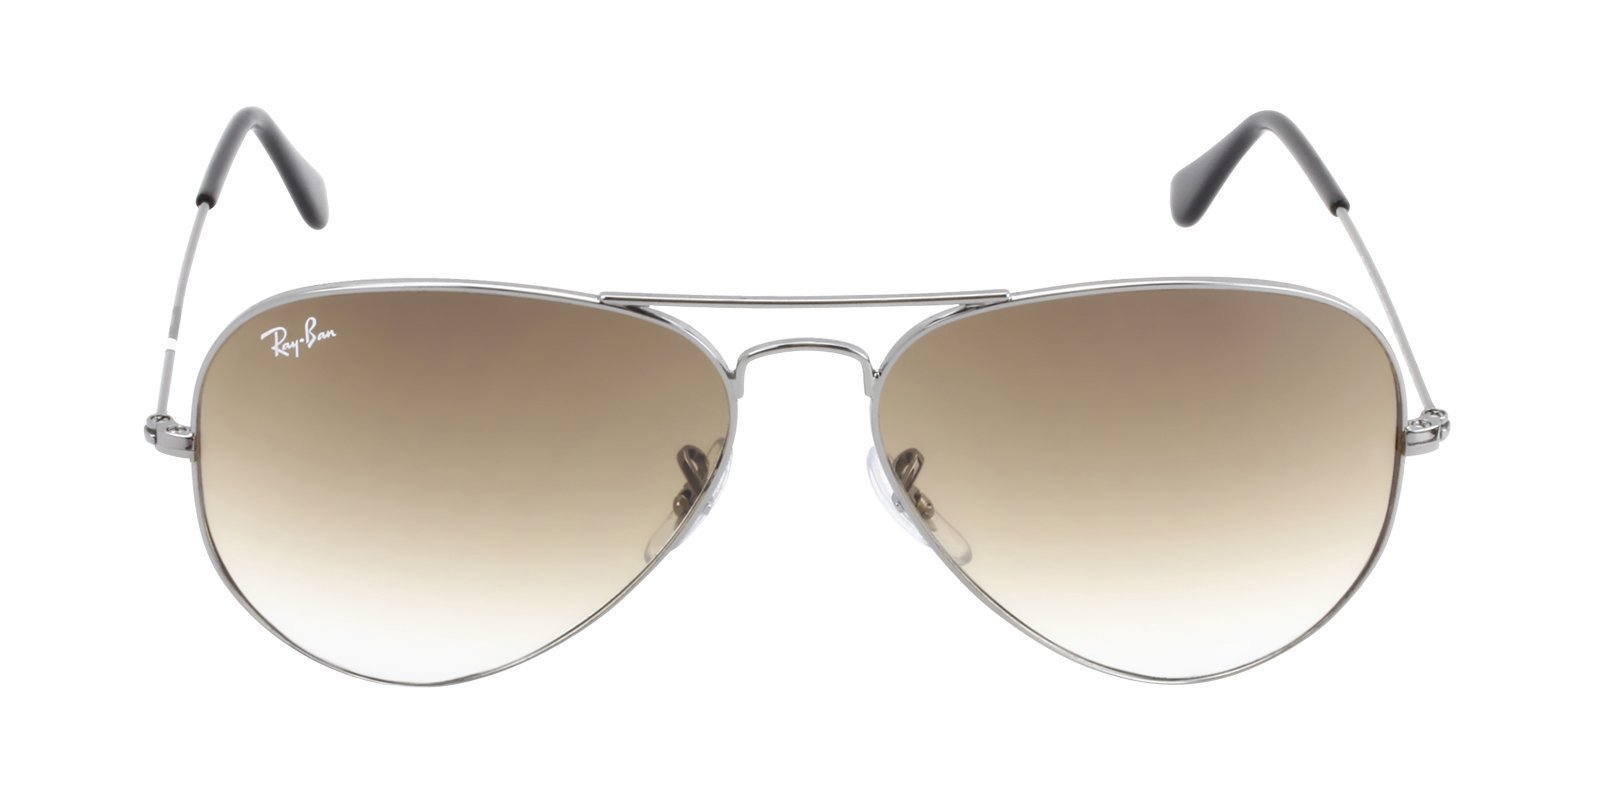 Men's Large Square Aviator 'The Rock' Johnson Celebrity Sunglasses